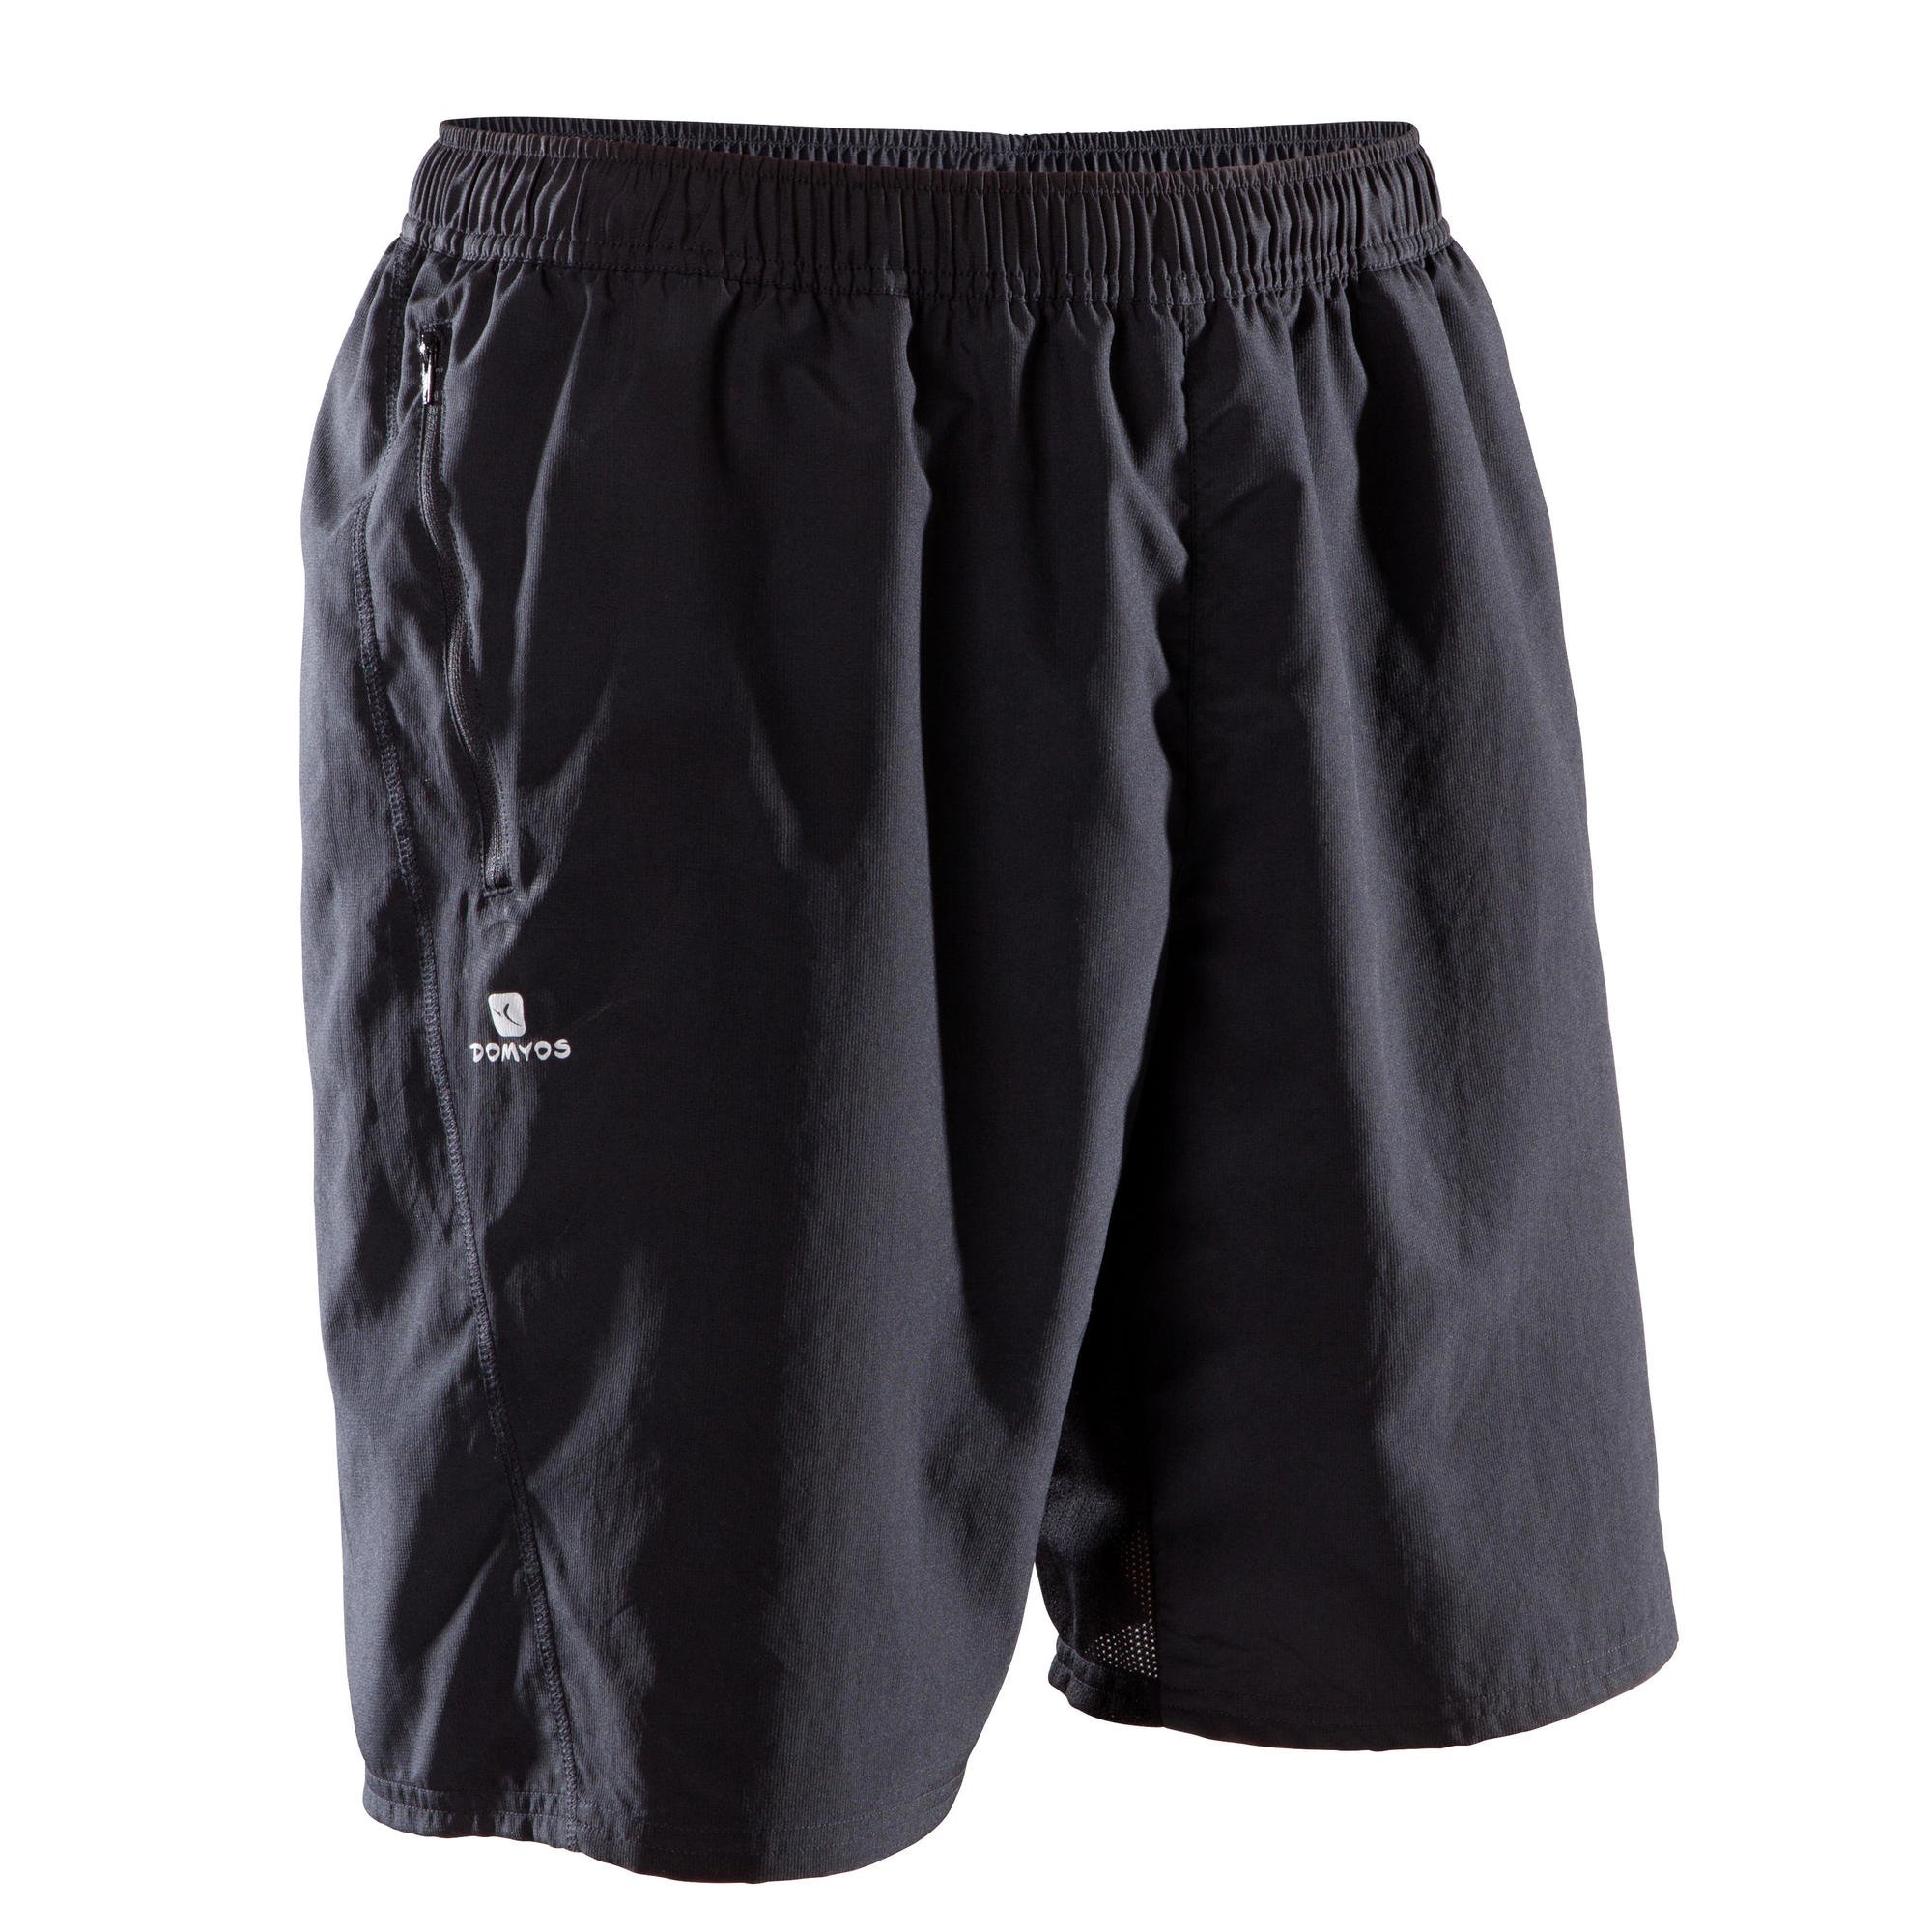 FST 120 Cardio Fitness Shorts - Black 